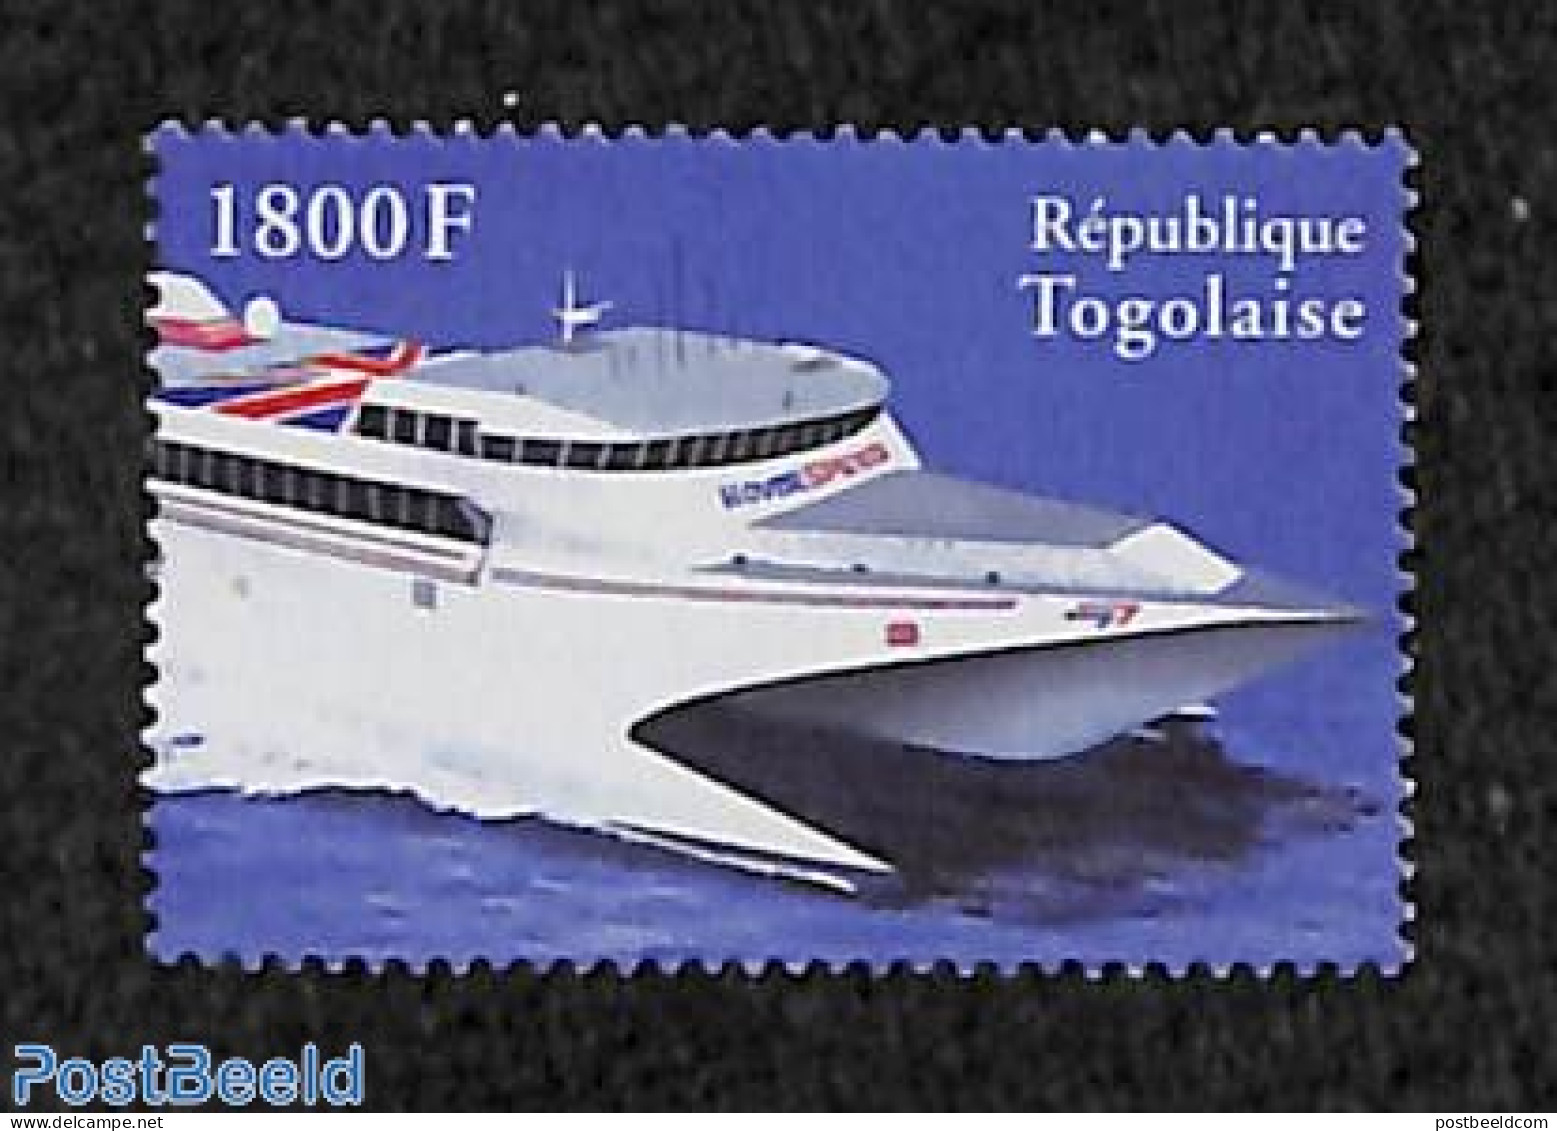 Togo 2000 Ship 1v, Mint NH - Togo (1960-...)